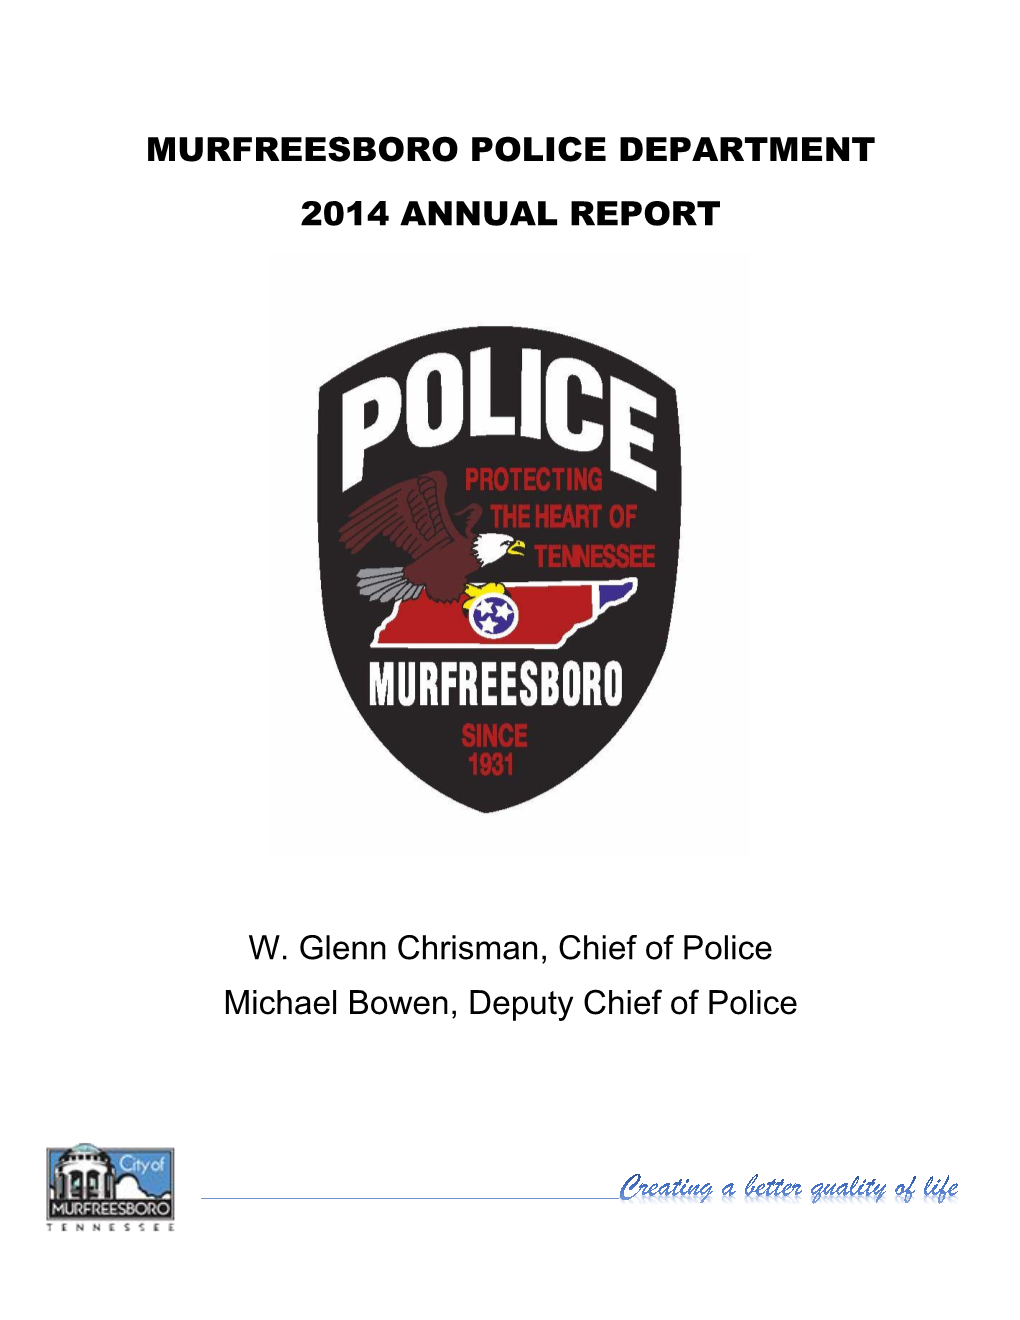 MURFREESBORO POLICE DEPARTMENT 2014 ANNUAL REPORT W. Glenn Chrisman, Chief of Police Michael Bowen, Deputy Chief of Police